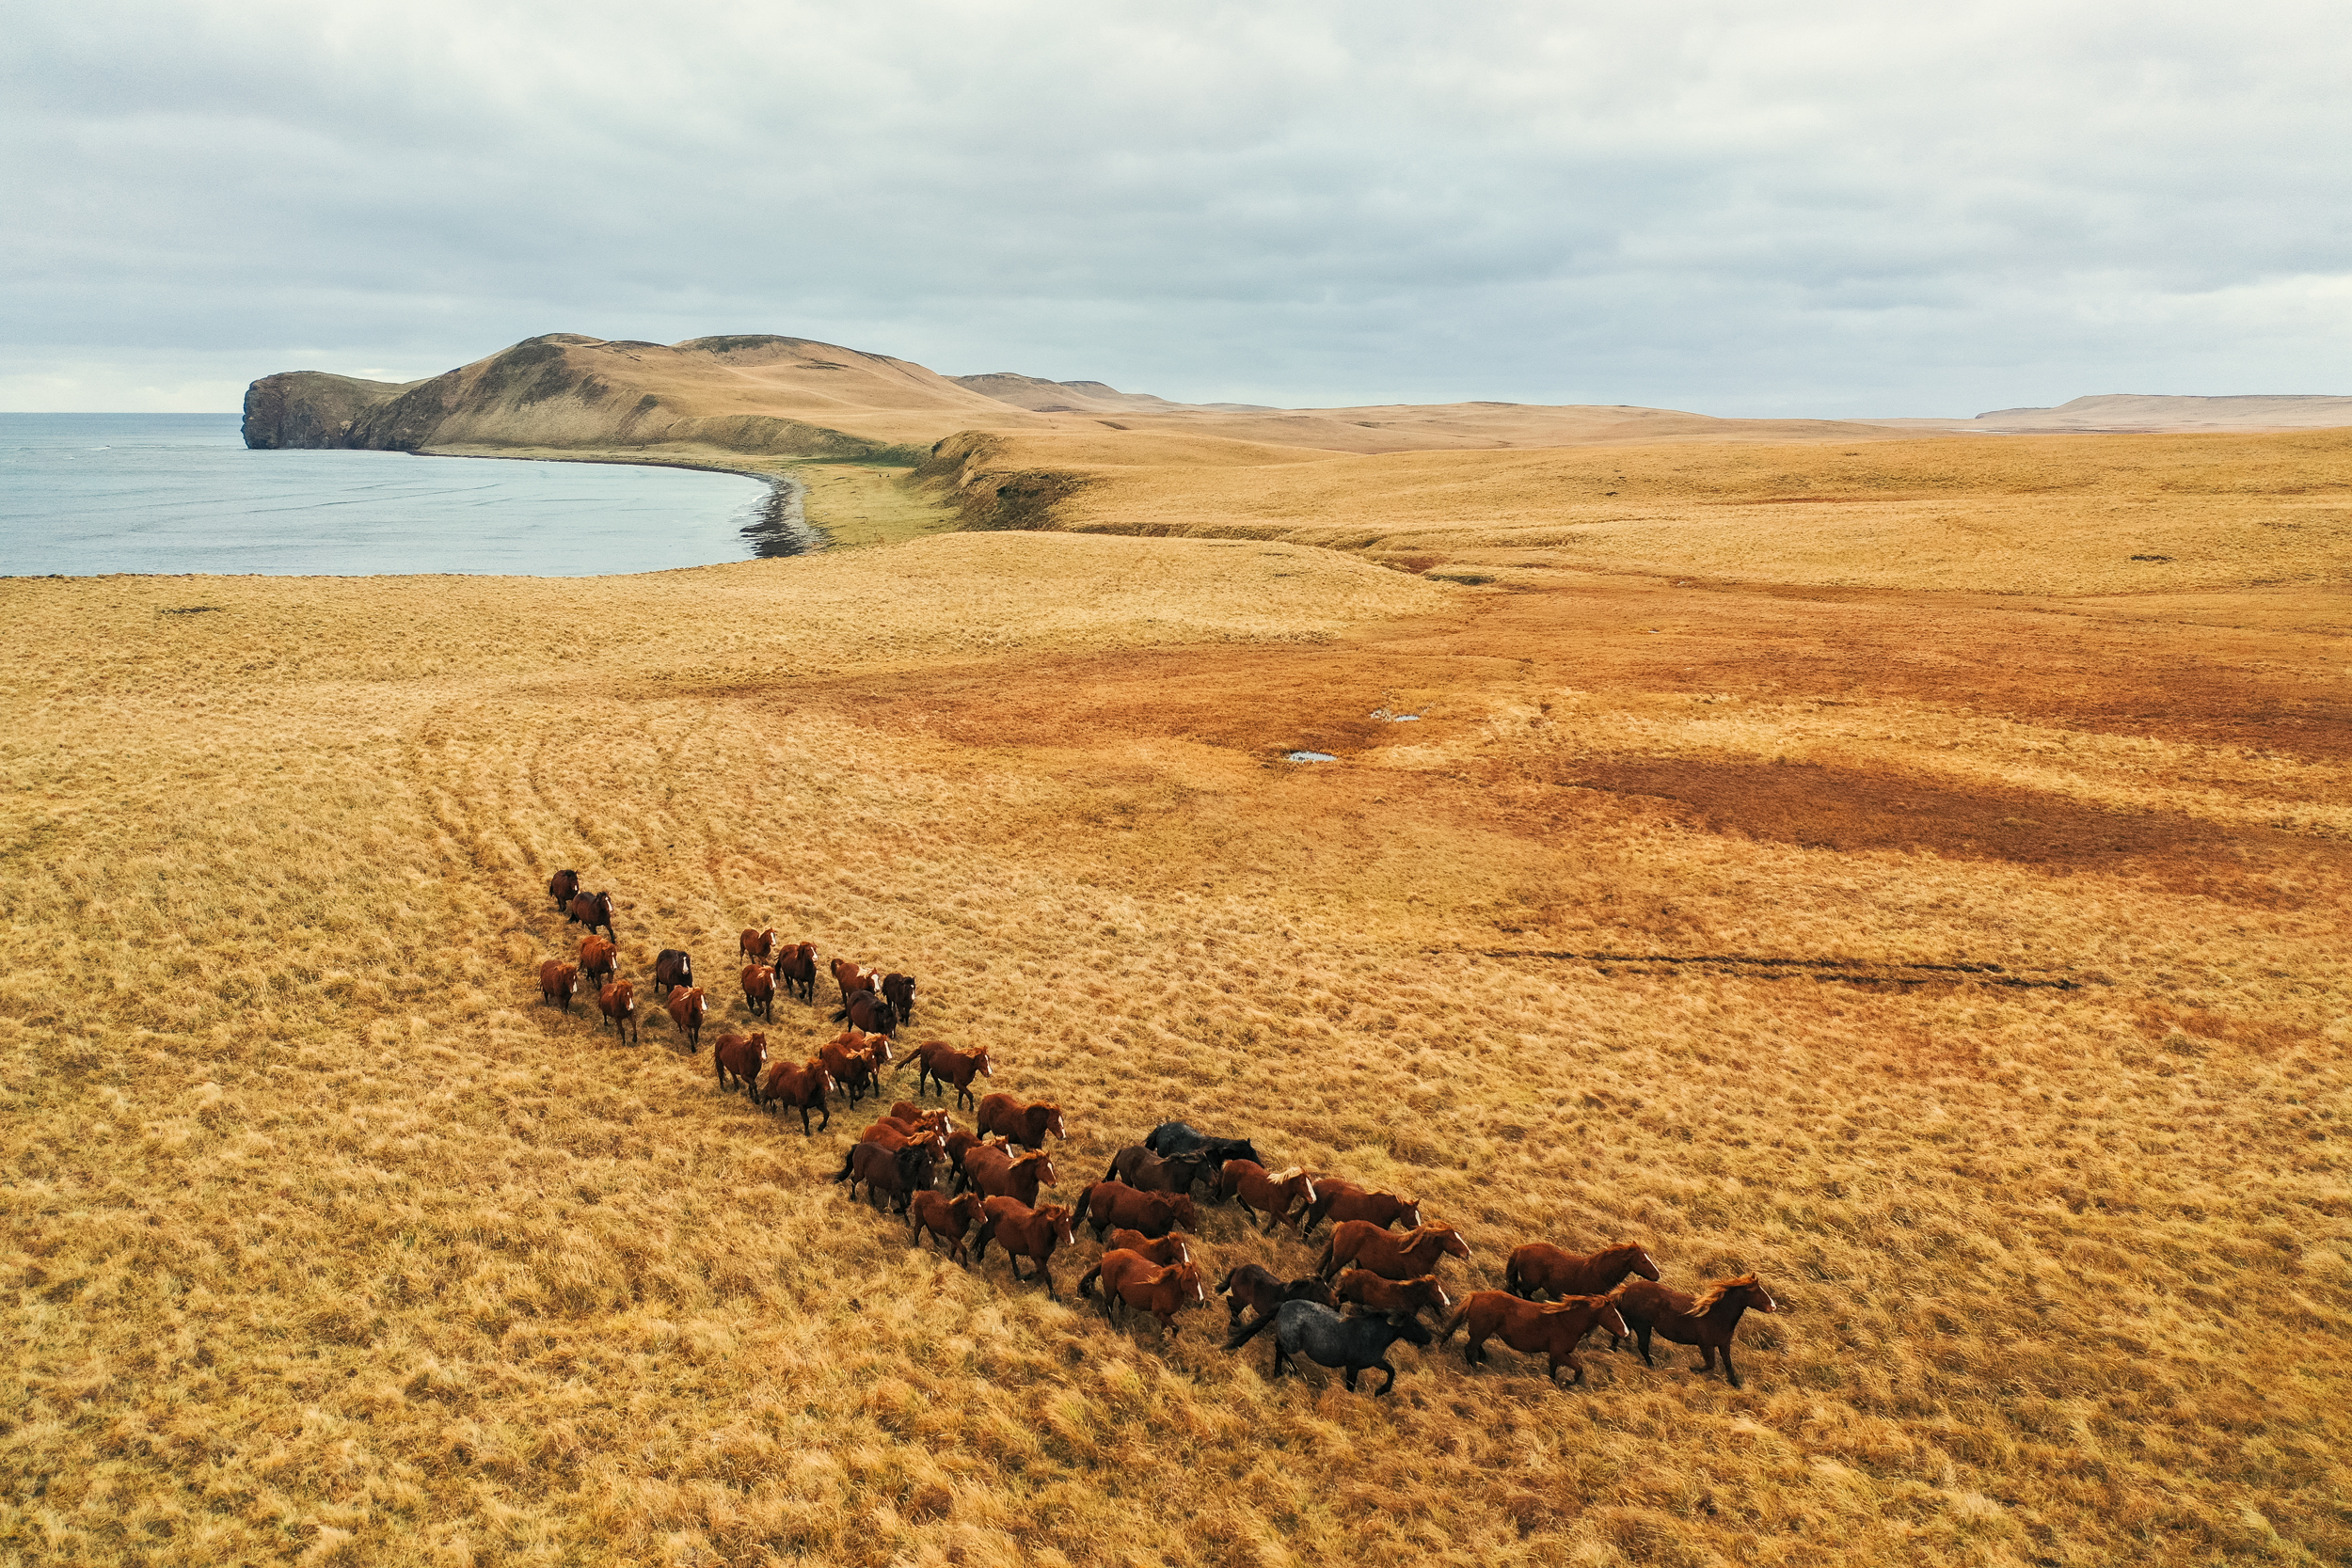 Wild horses in the Aleutian Islands, shot by Chris Burkard on a Roark surf trip